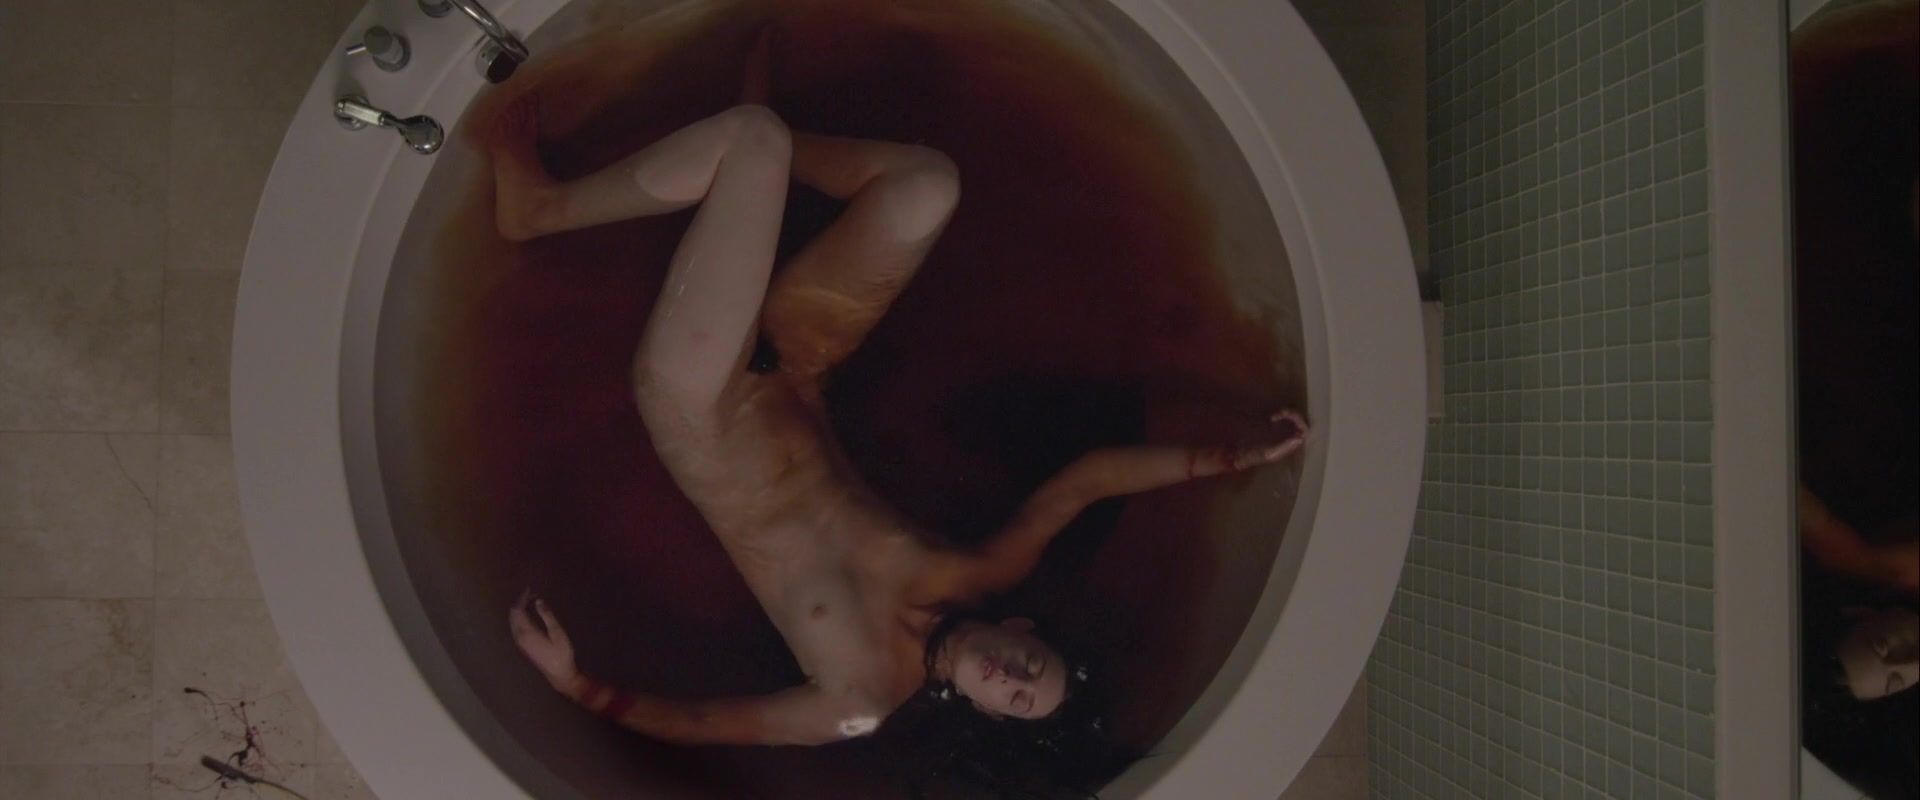 ManyVids Shaving legs and a nude scene in the bathroom with topless celebrity Sara Malakul of the movie "Sun Choke" FreeAnimeForLife